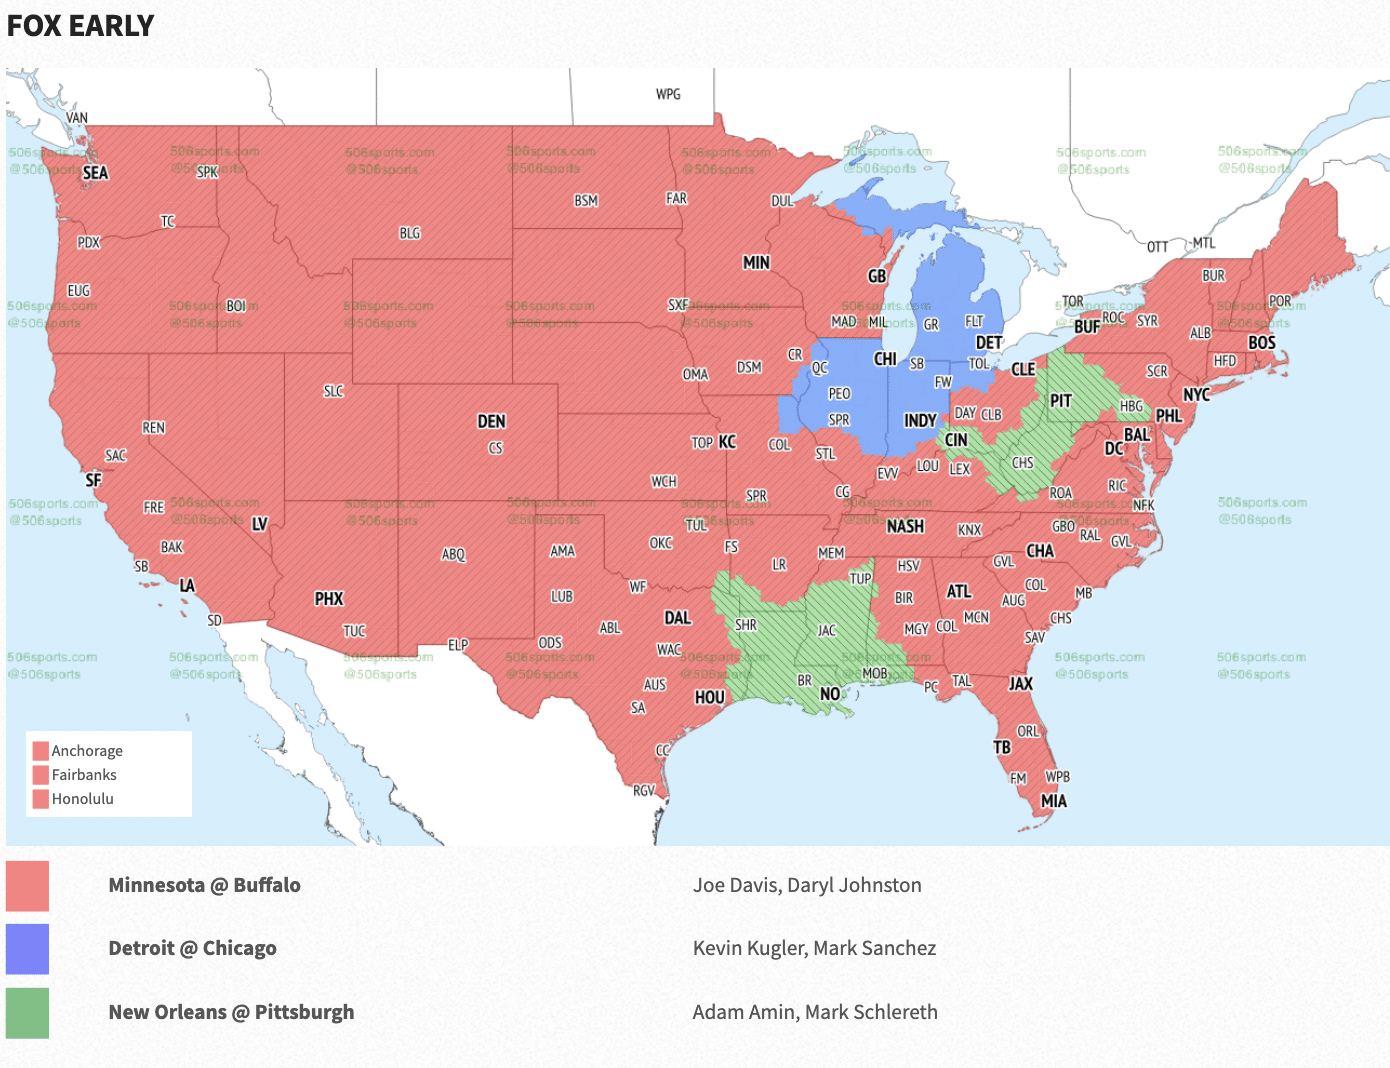 NFL Week 10 Coverage Maps